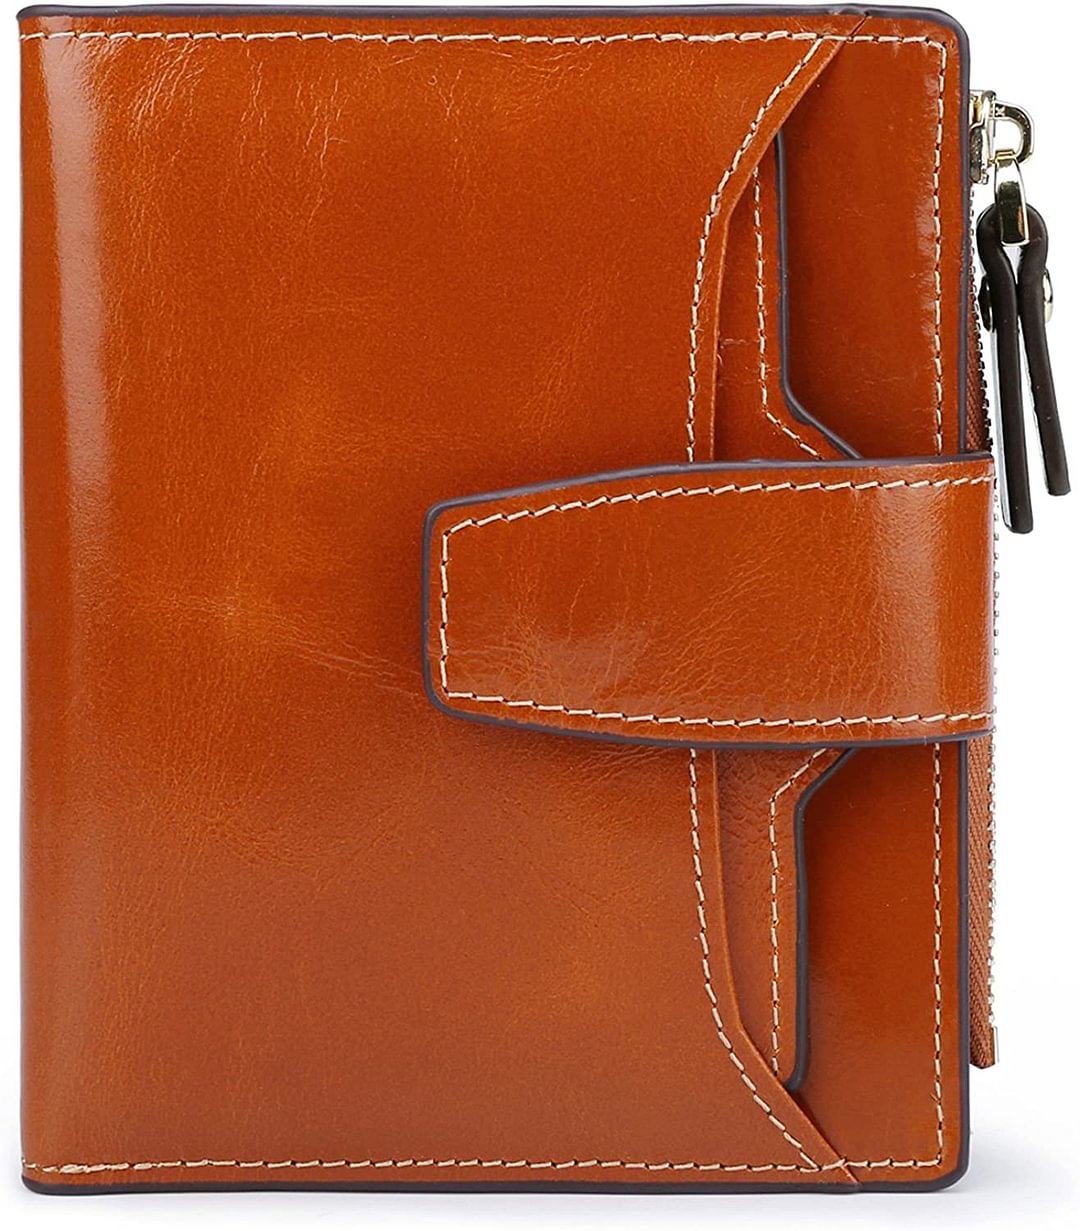 Women's RFID Blocking Leather Small Compact Bi-fold Zipper Pocket Wallet Card Case Purse with id Window